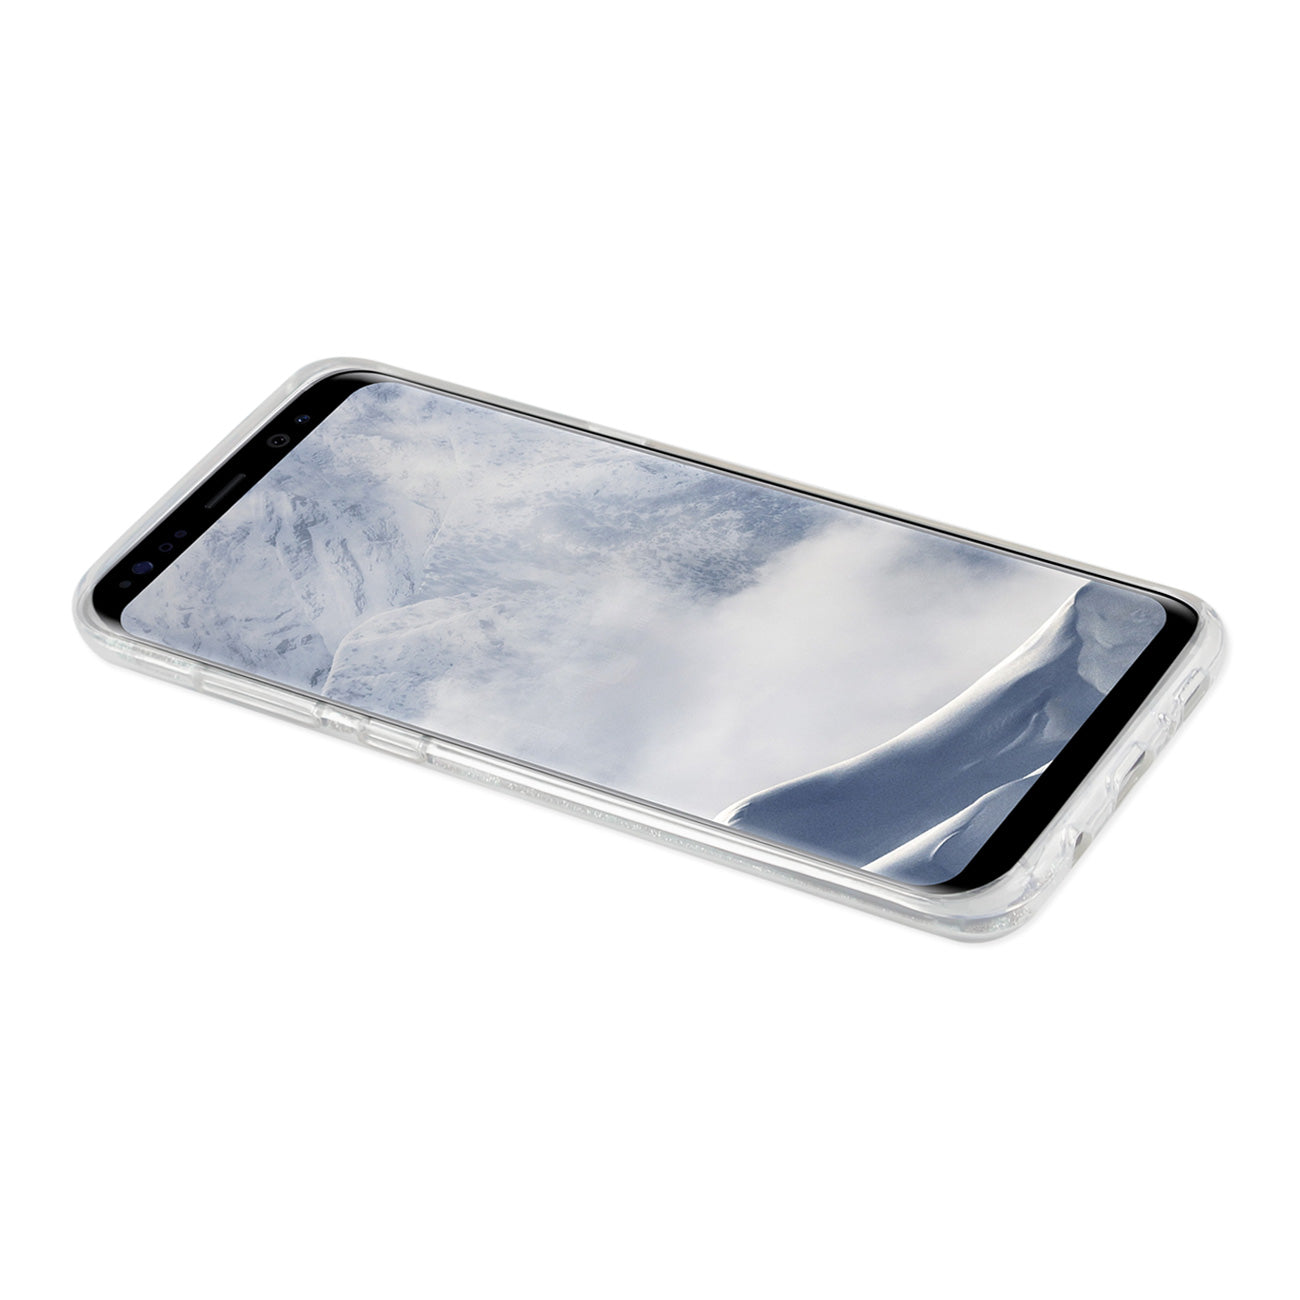 Samsung Galaxy S8 Edge/ S8 Plus Shine Glitter Shimmer Plum Blossom Hybrid Case In Silver